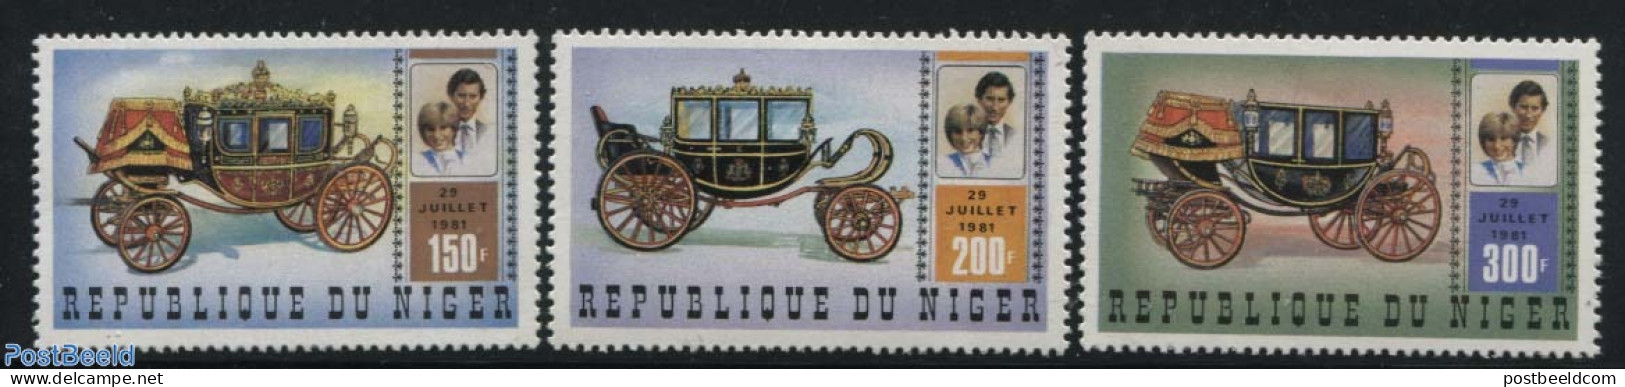 Niger 1981 Charles & Diana Wedding 3v, Mint NH, History - Transport - Charles & Diana - Kings & Queens (Royalty) - Coa.. - Koniklijke Families